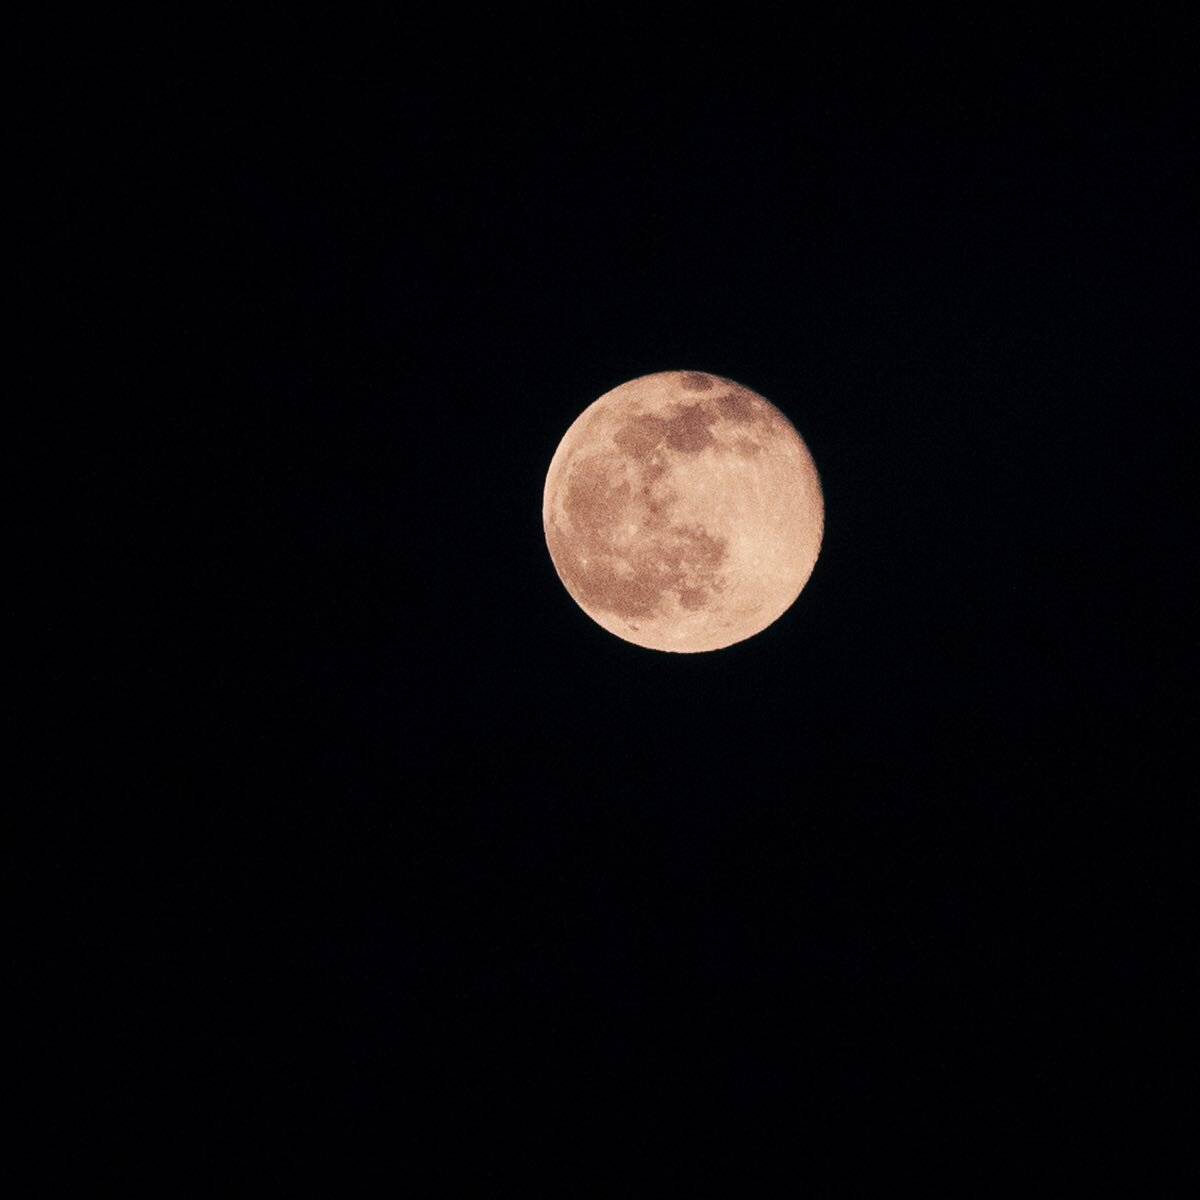 last night, first full moon 2022

#herewego2022 #reset #fullmoon #moondetails #infraredshot #ontheroadinswitzerland 
#filmphotography #patriciavonah